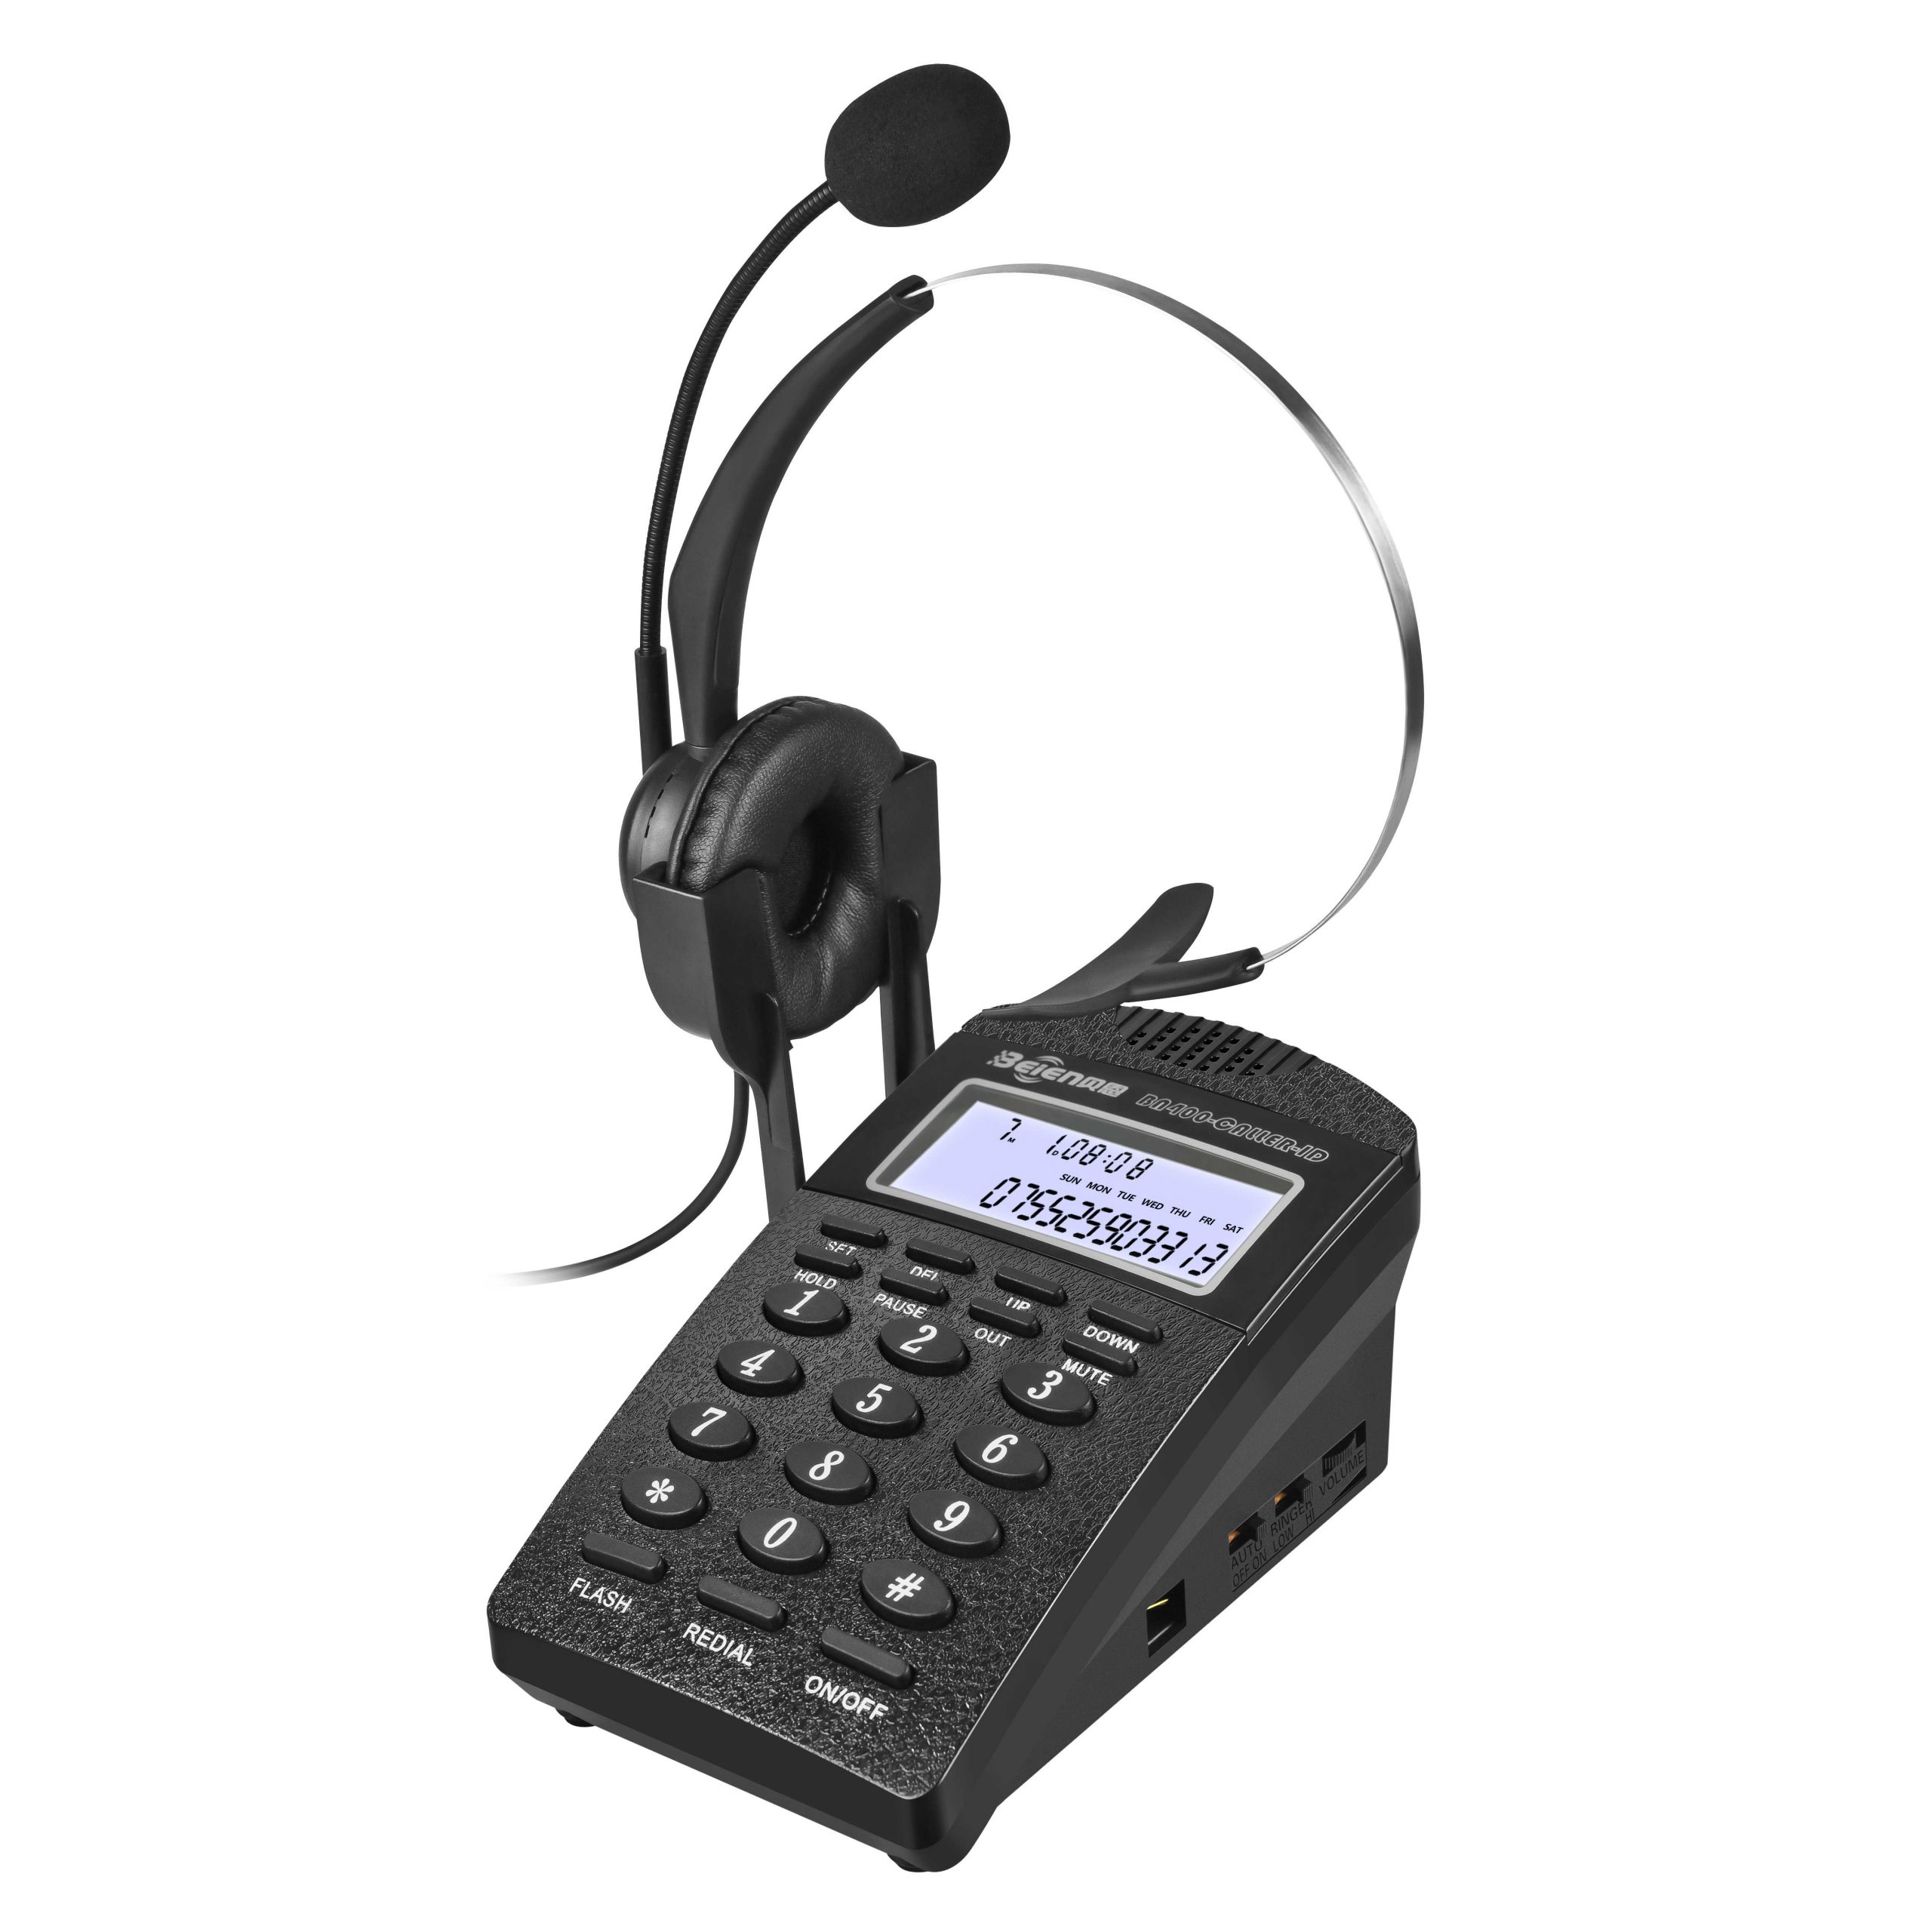 Beien贝恩BN400 话务耳机和电话拨号盘套装 外呼办公专用电话耳麦组合